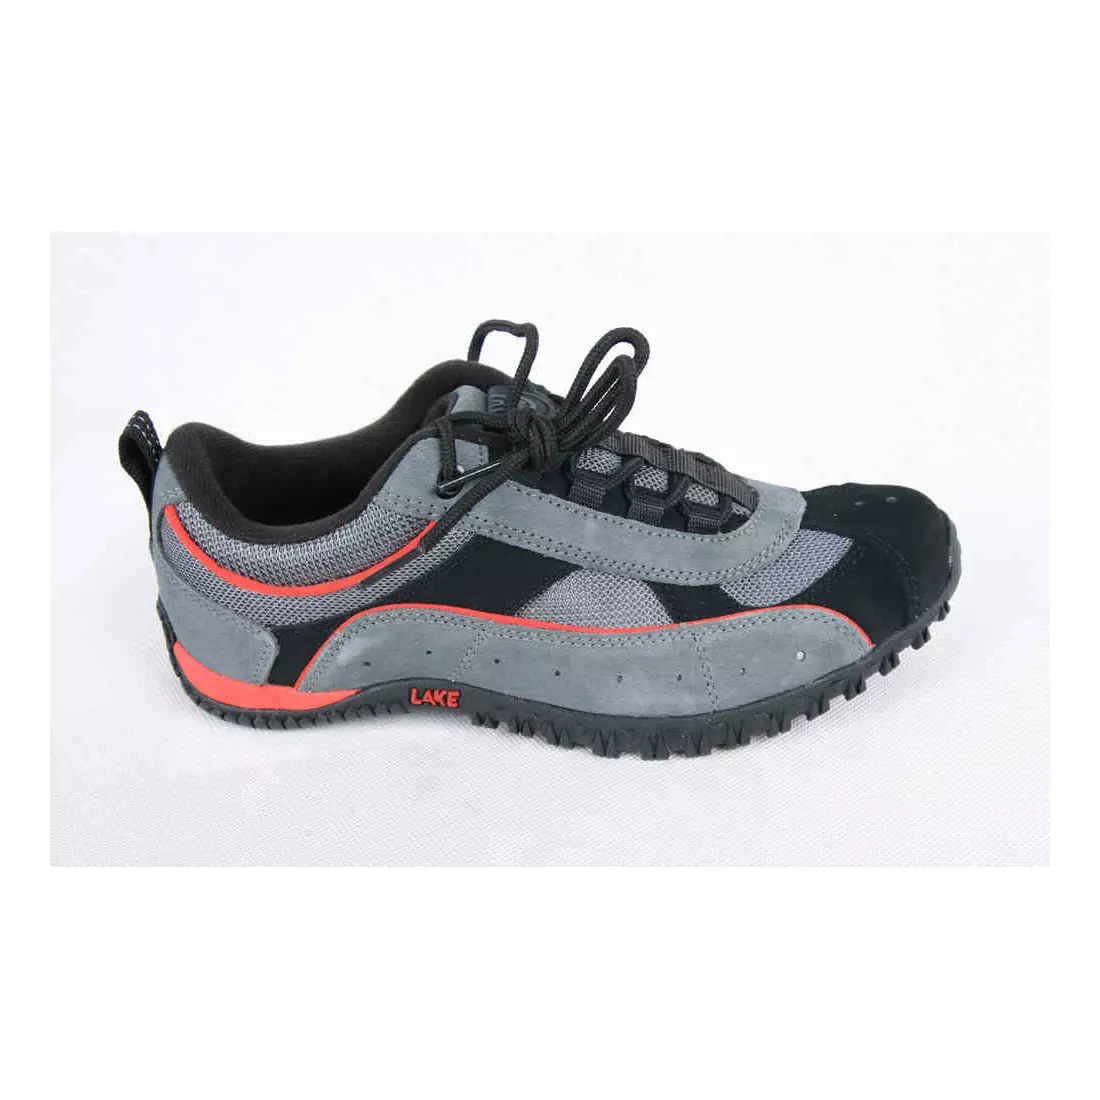 LAKE MX90 - cycling hiking shoes